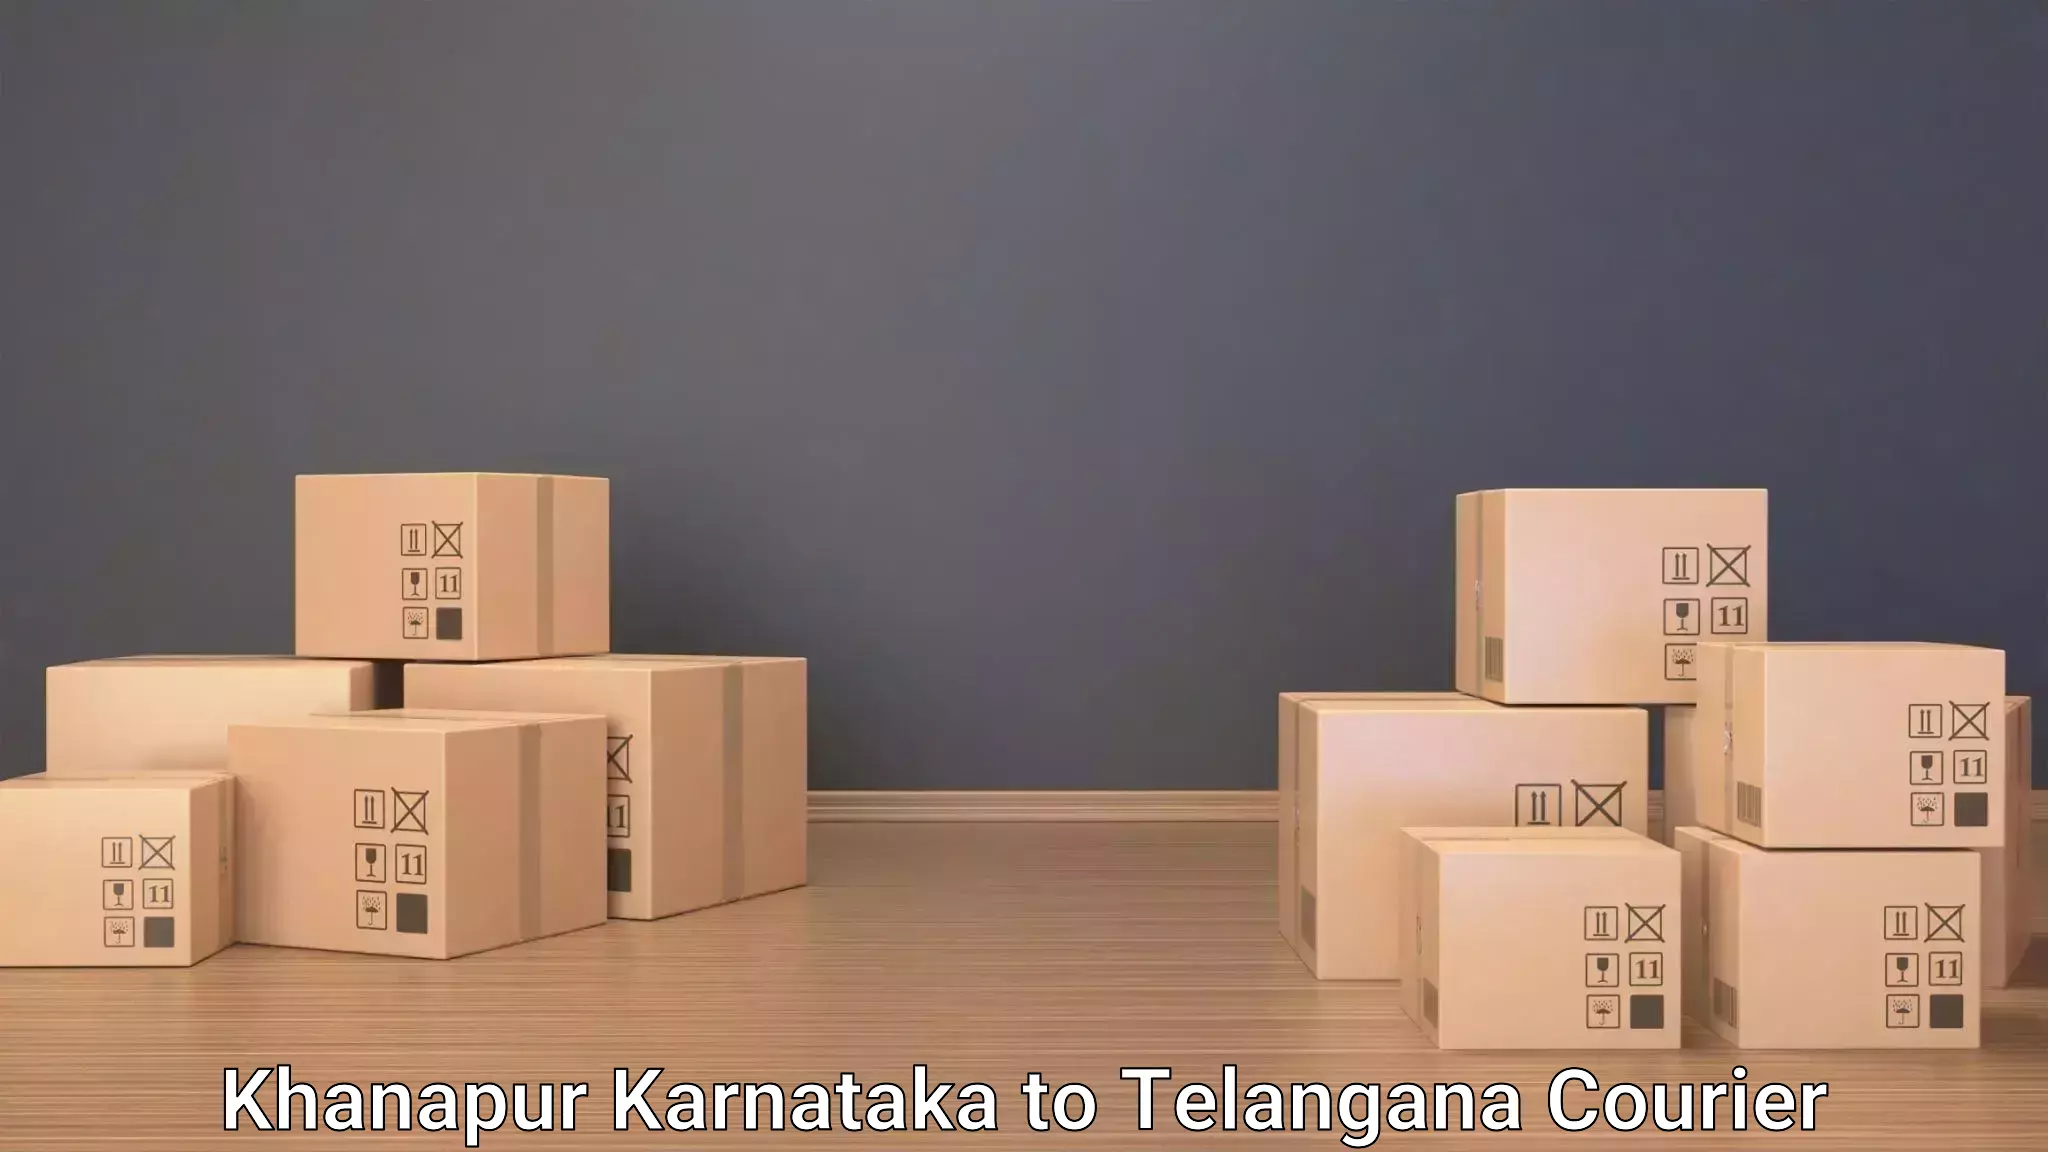 Baggage transport professionals Khanapur Karnataka to Ramagundam